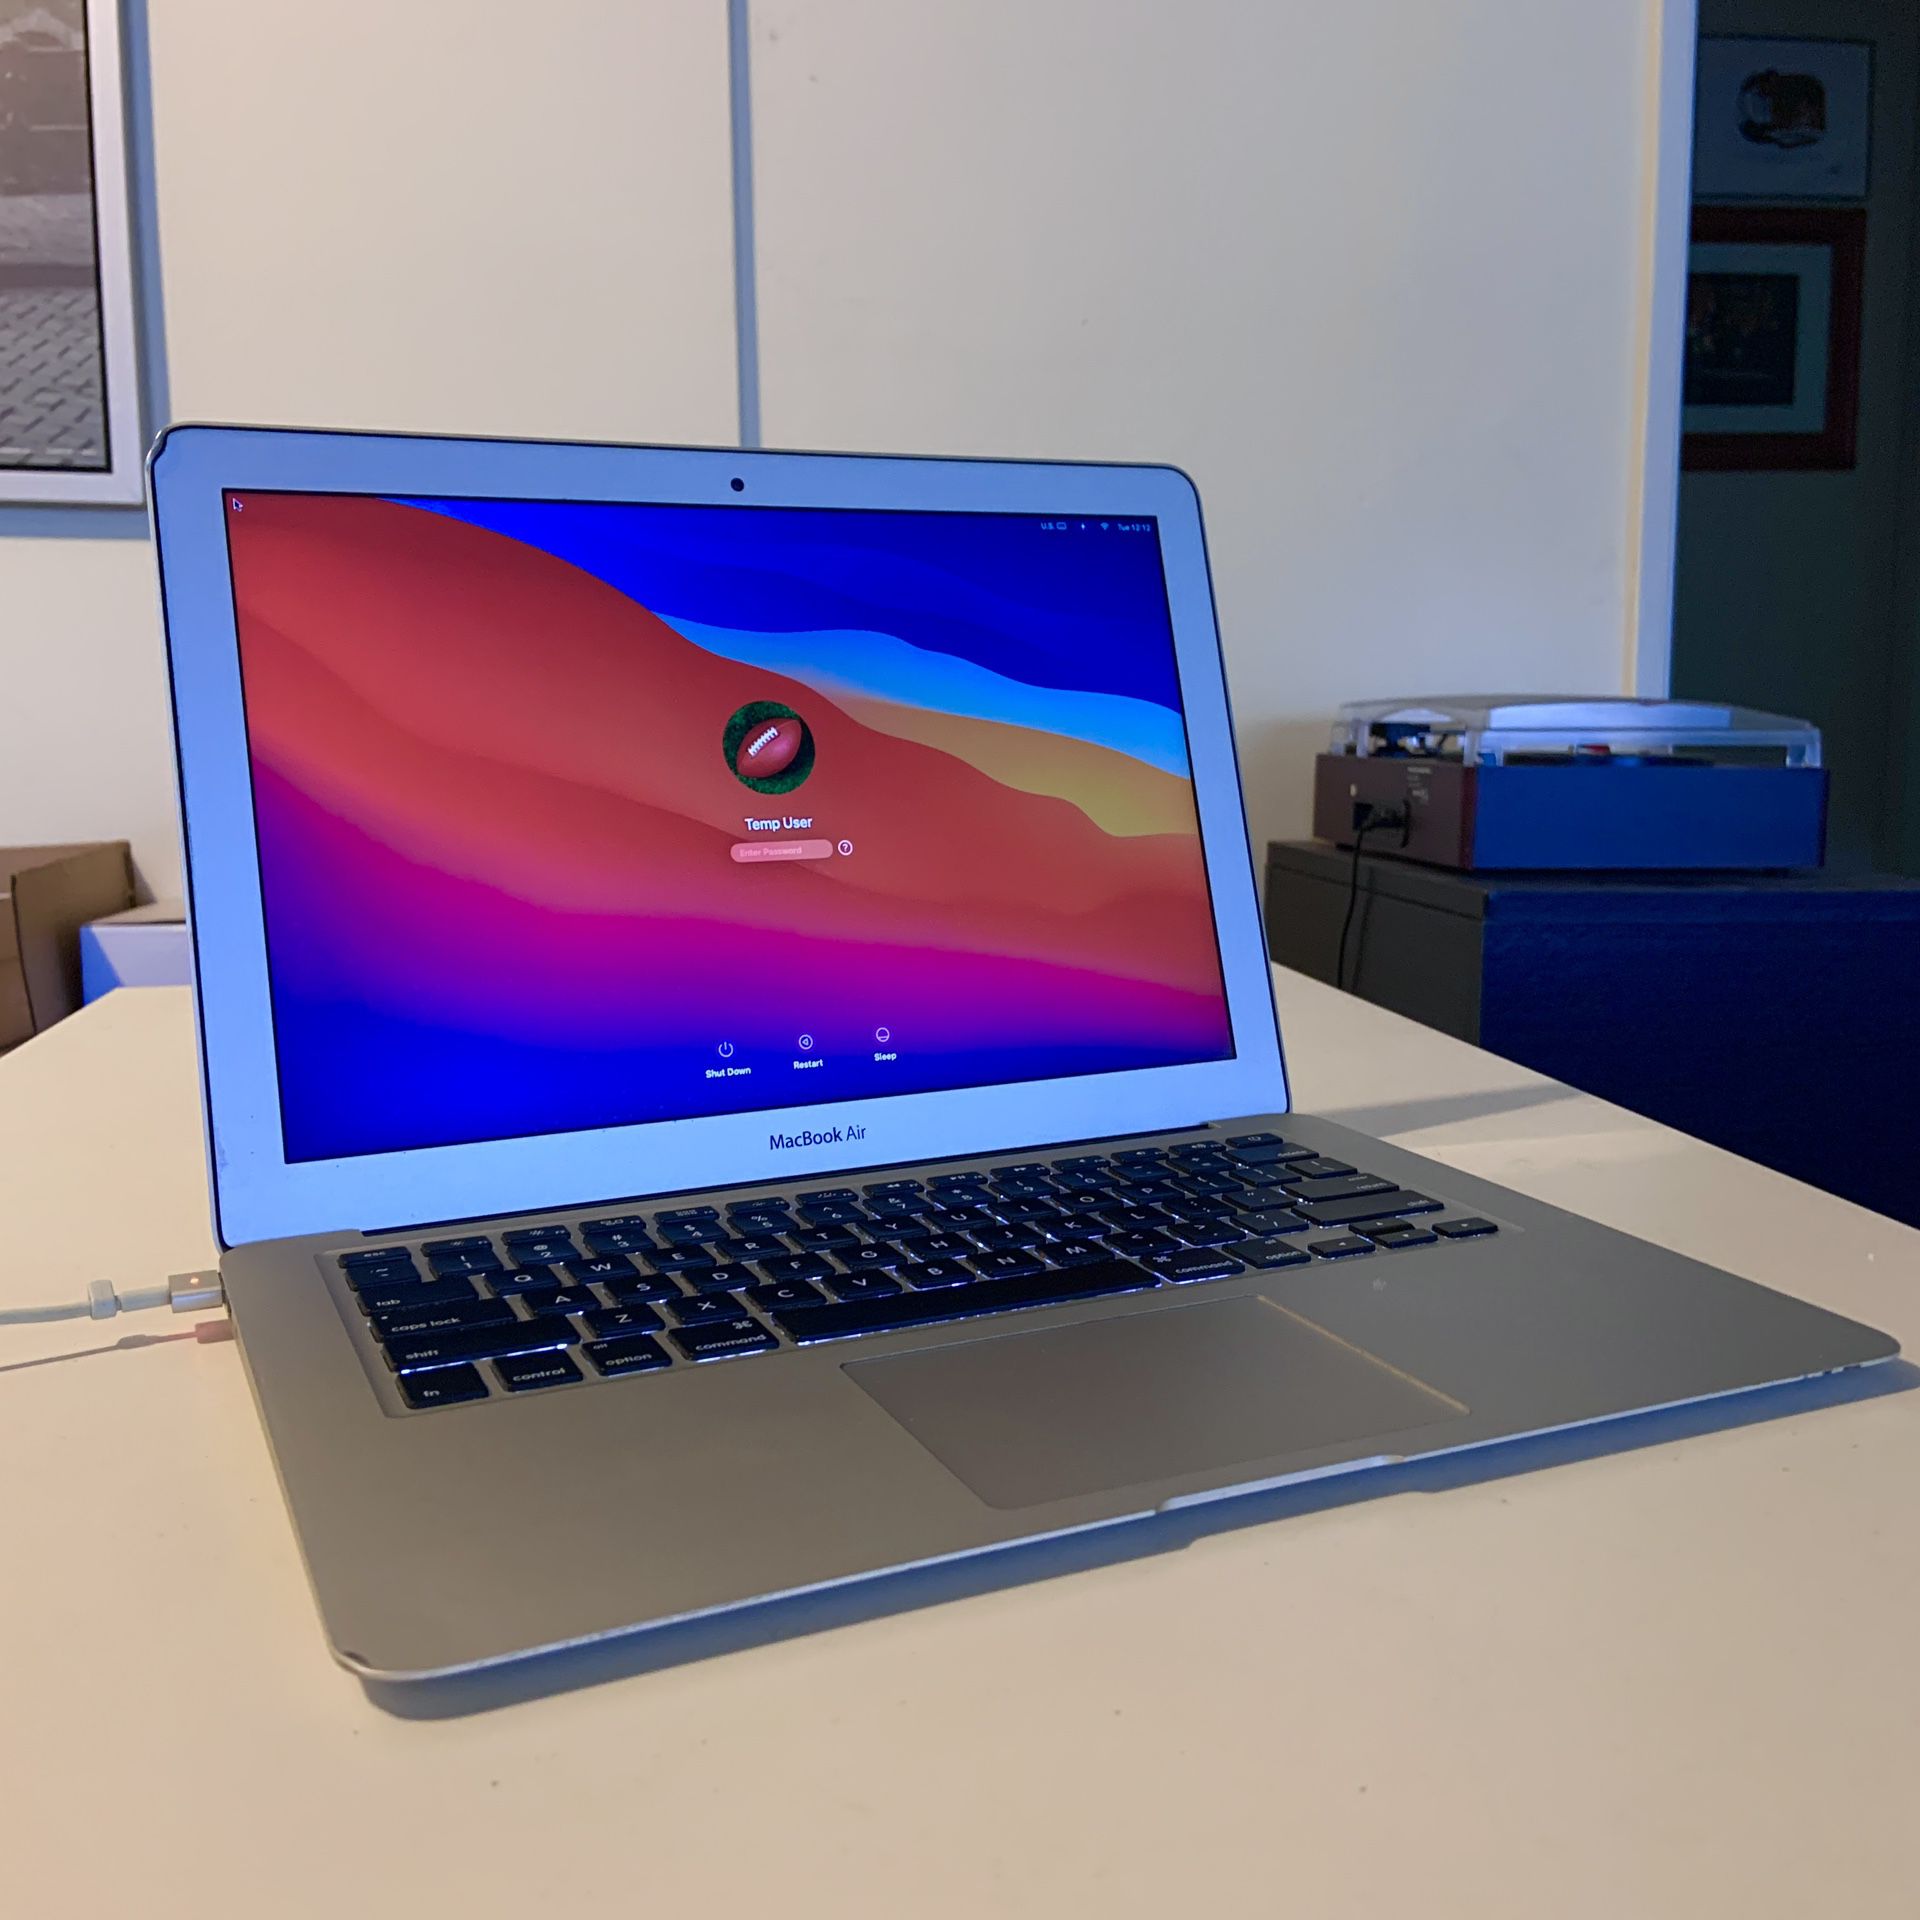 MacBook Air 13-inch [Refurbished]